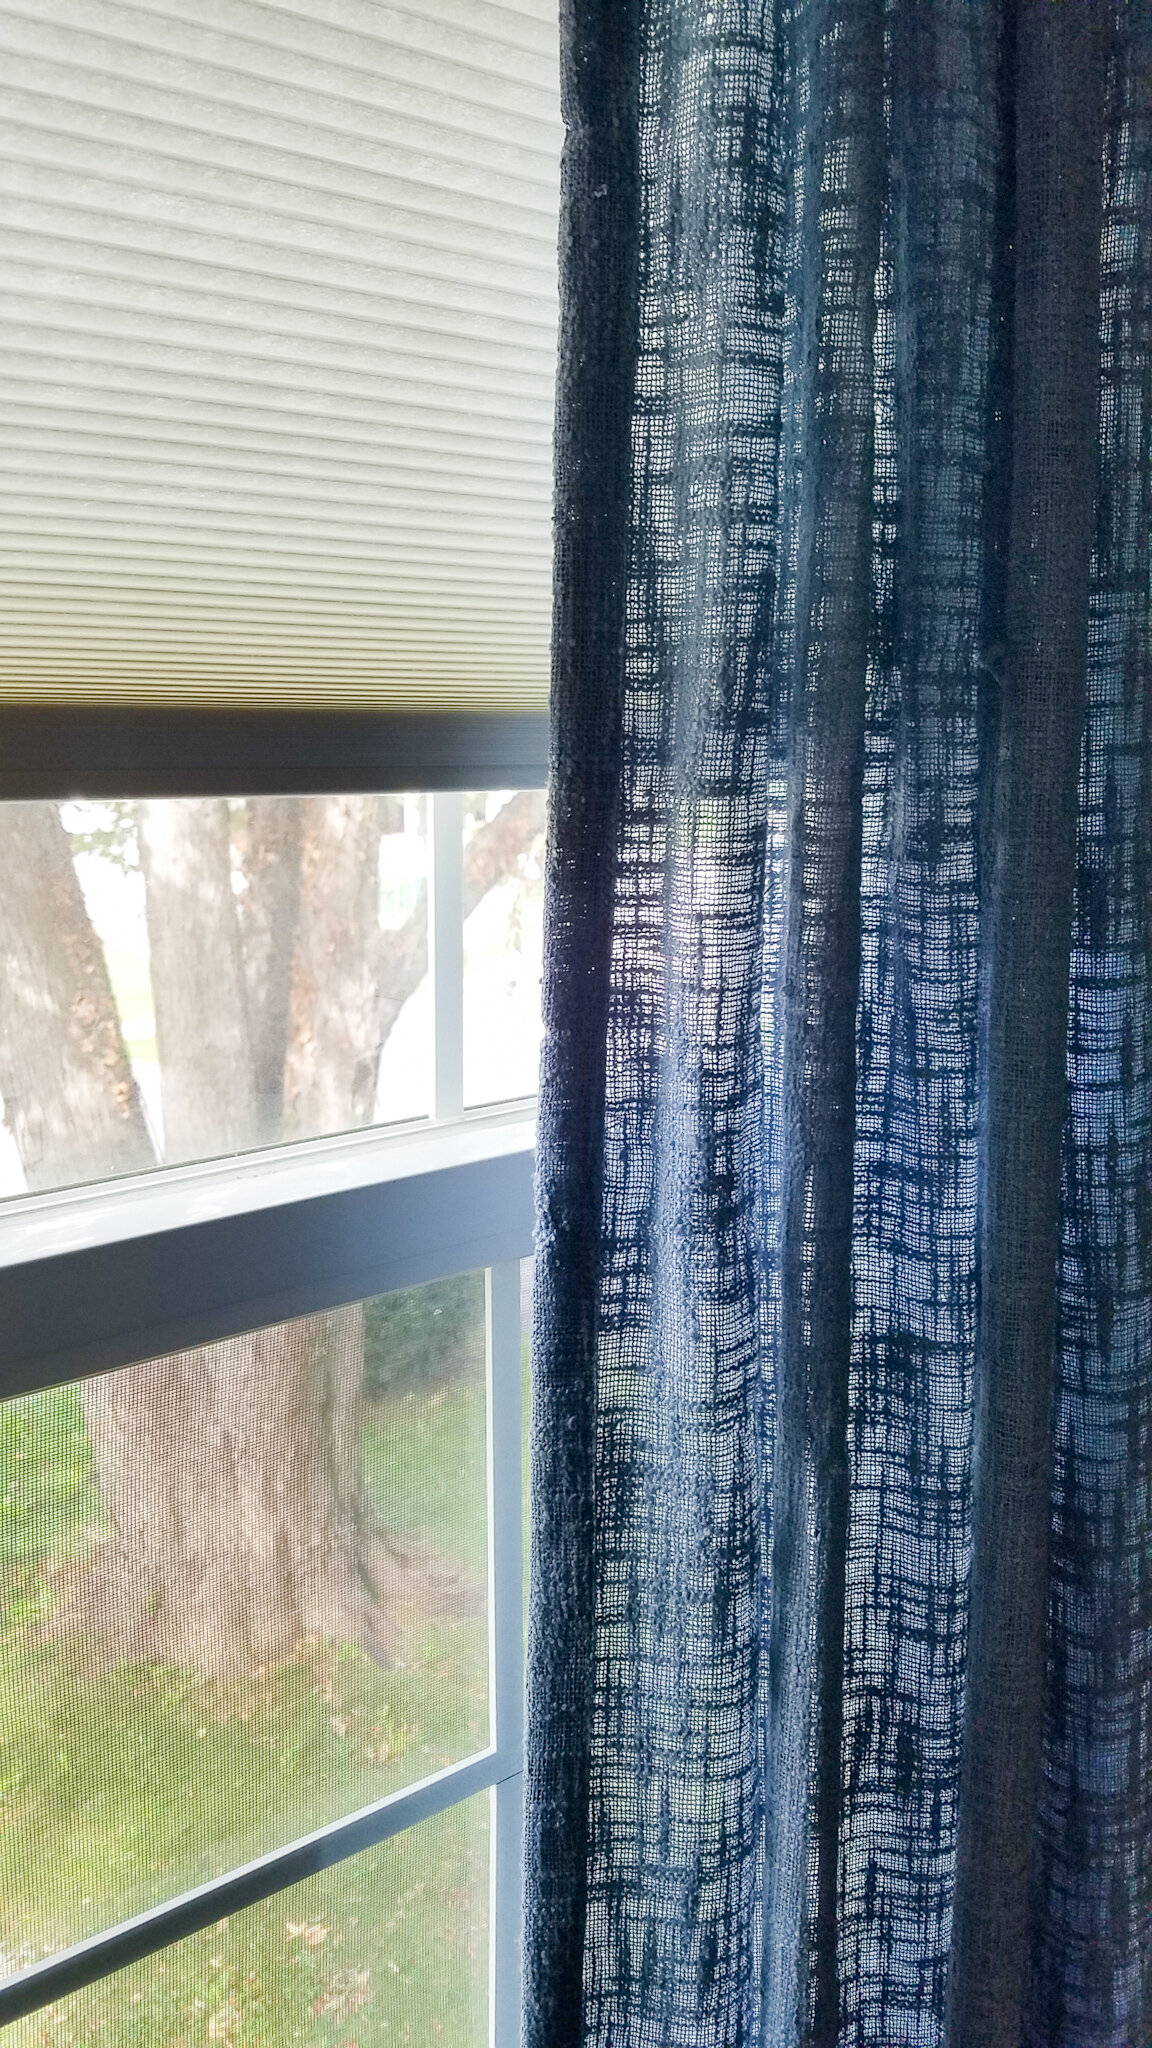 New light-filtering shades vs old curtains